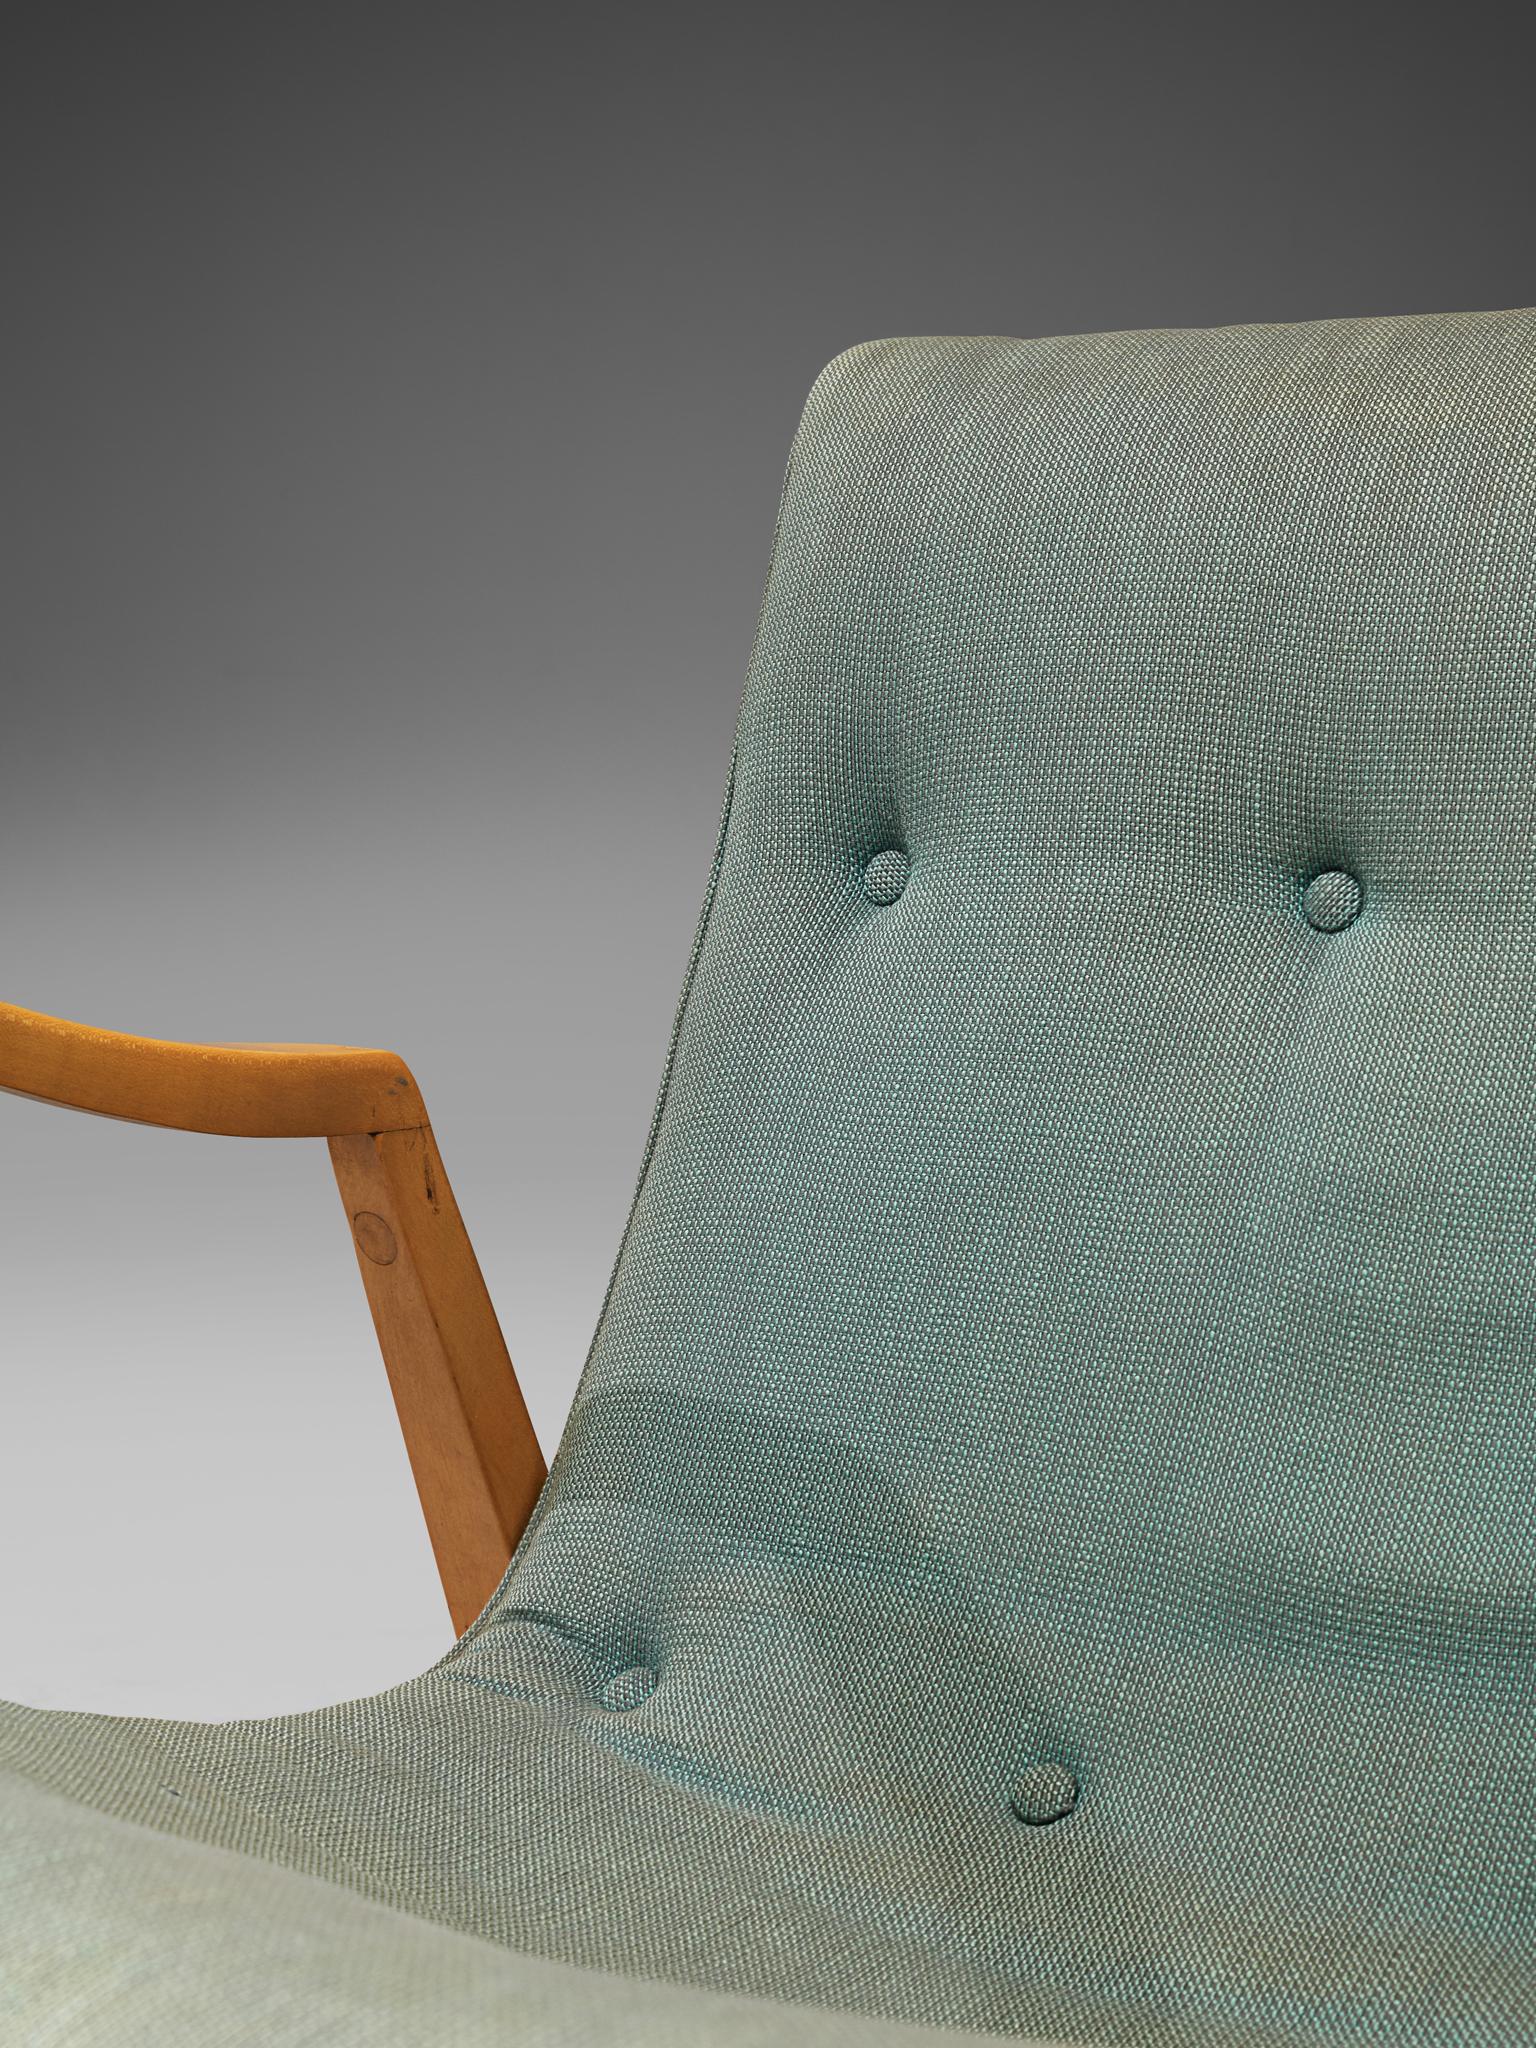 Mid-20th Century Milo Baughman 'Scoop' Lounge Chair, 1950s